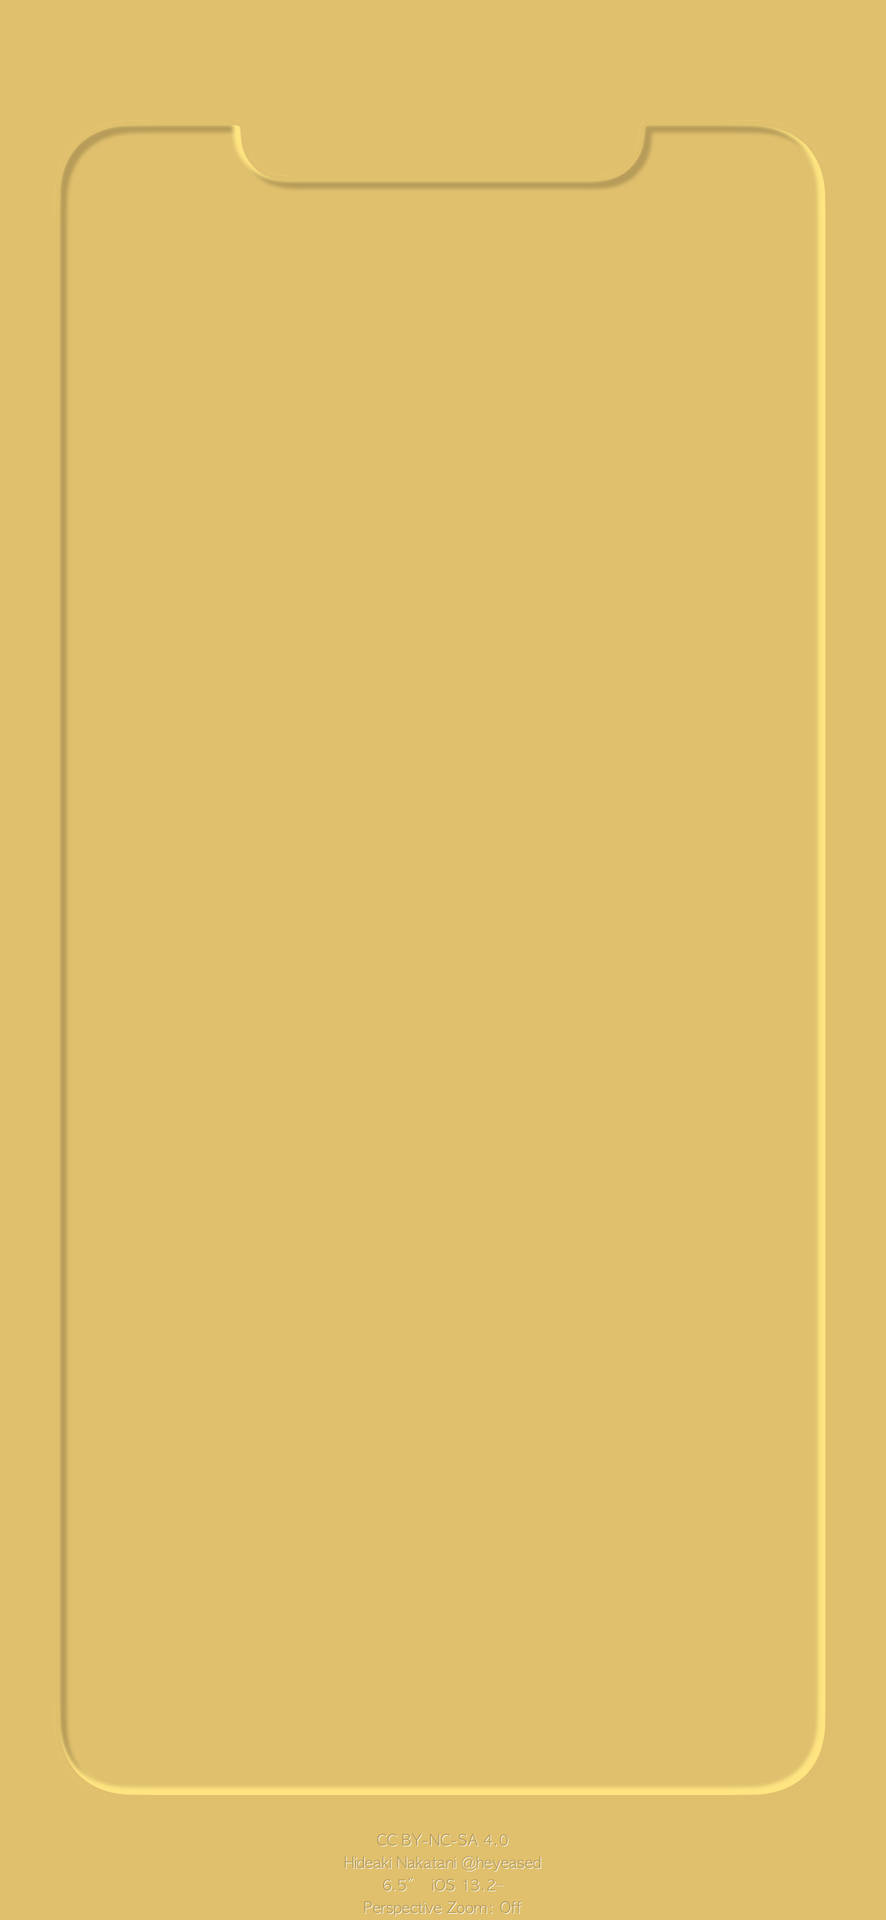 Outline 3d Mustard Yellow Display Iphone Wallpaper